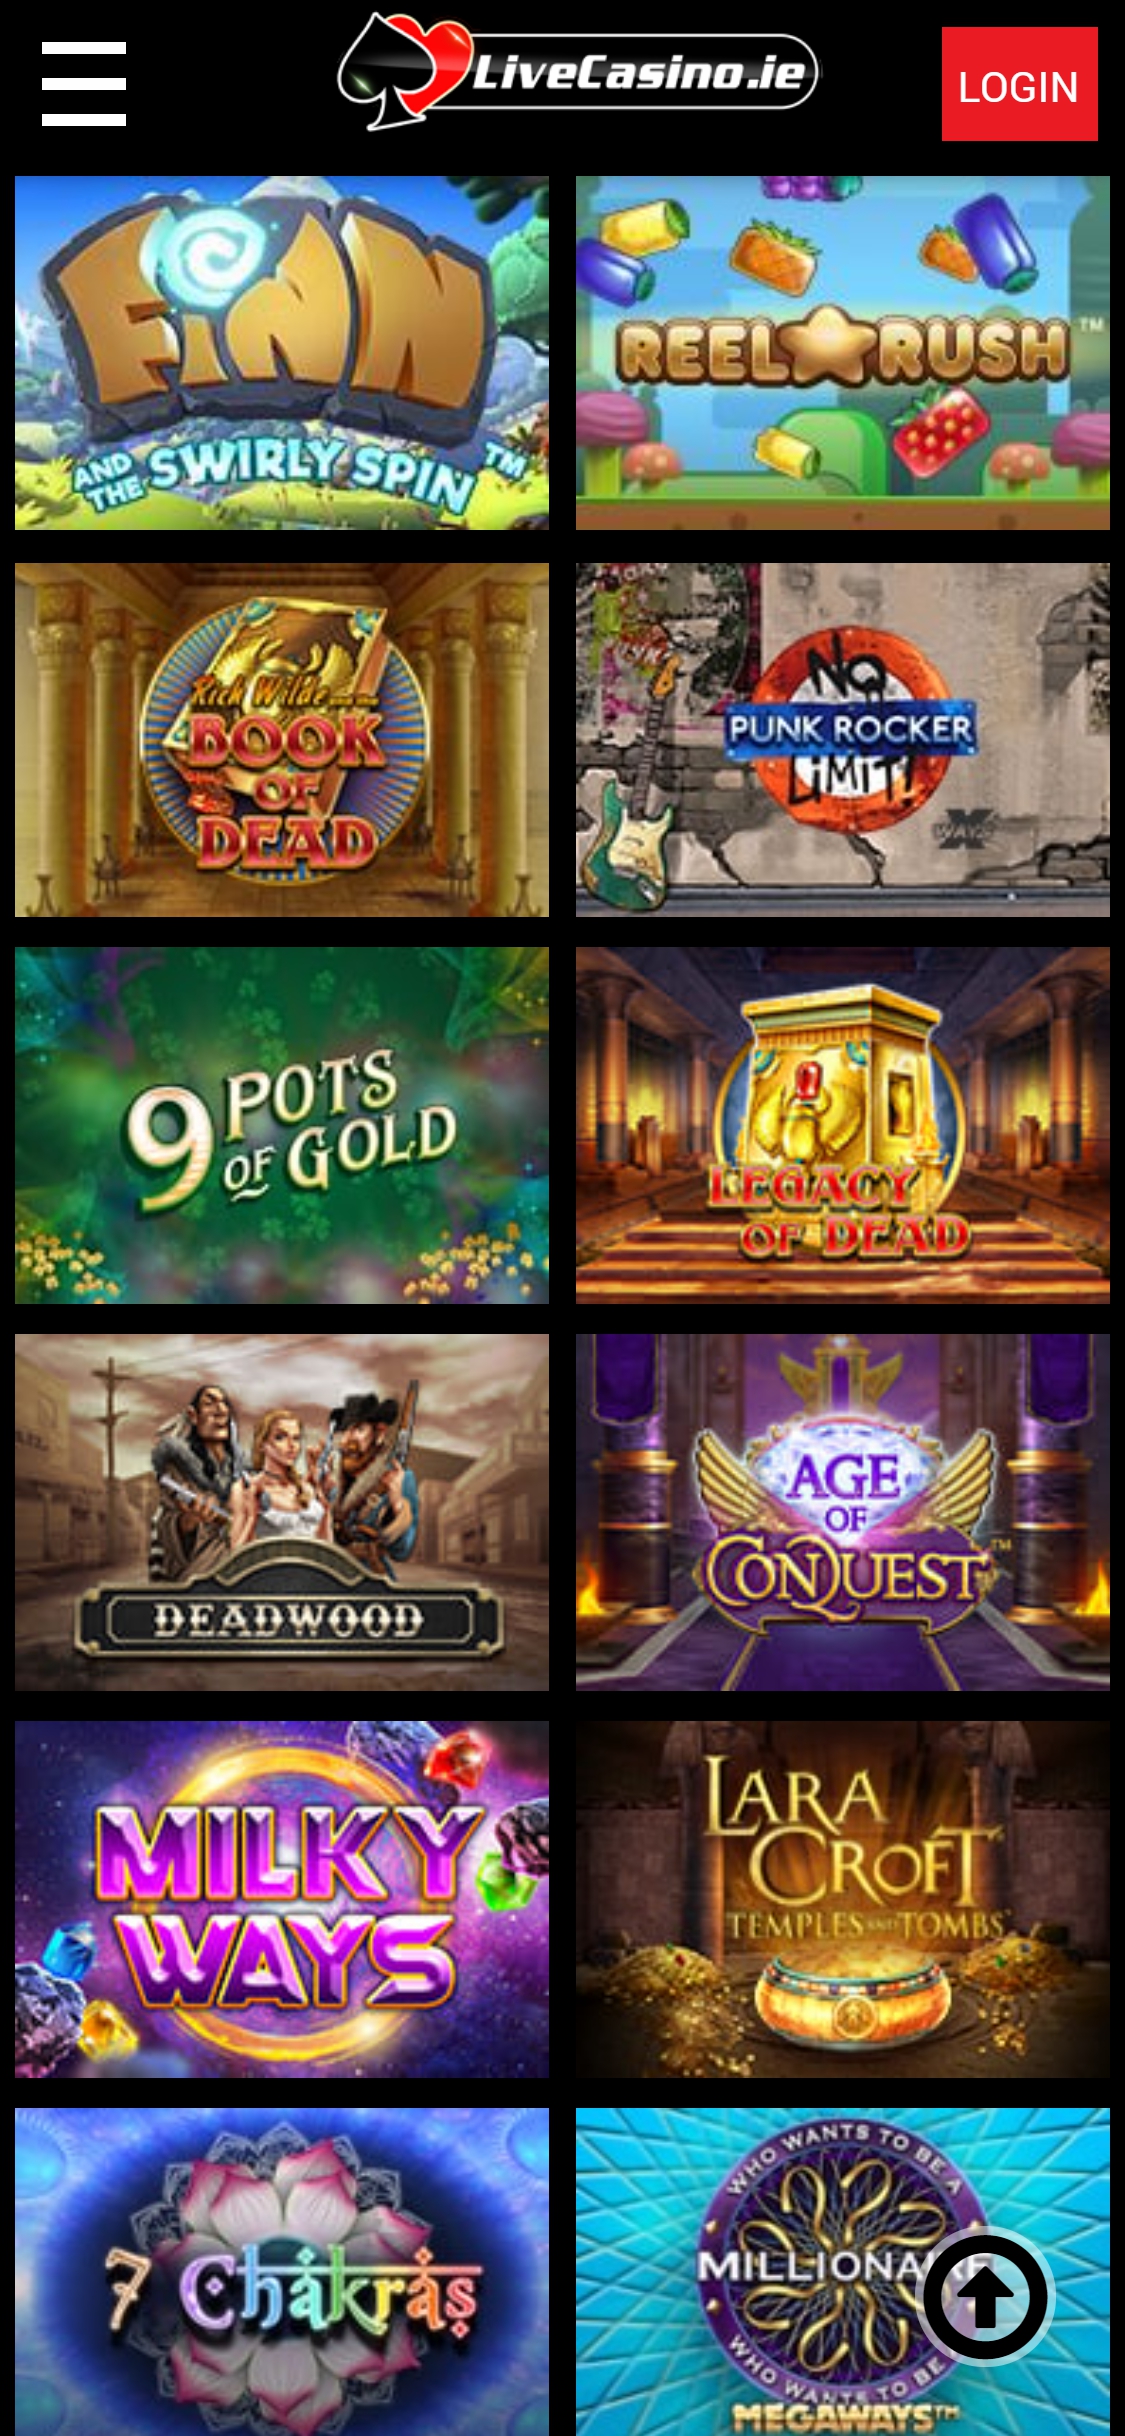 Live Casino Ireland Mobile Games Review